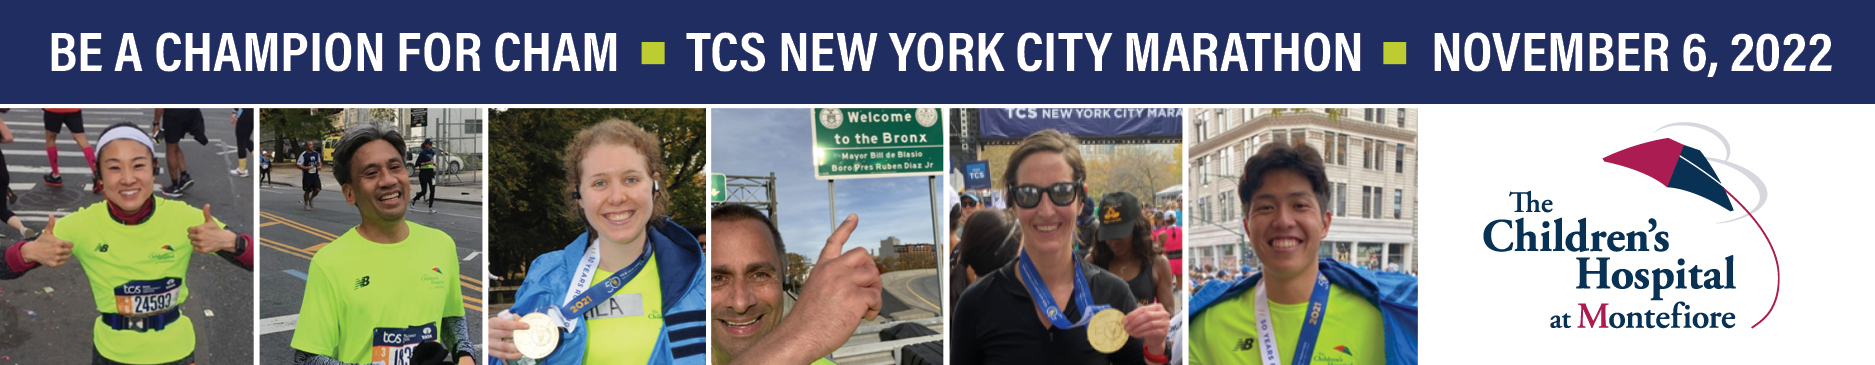 2022 TCS New York City Marathon: Champions for CHAM